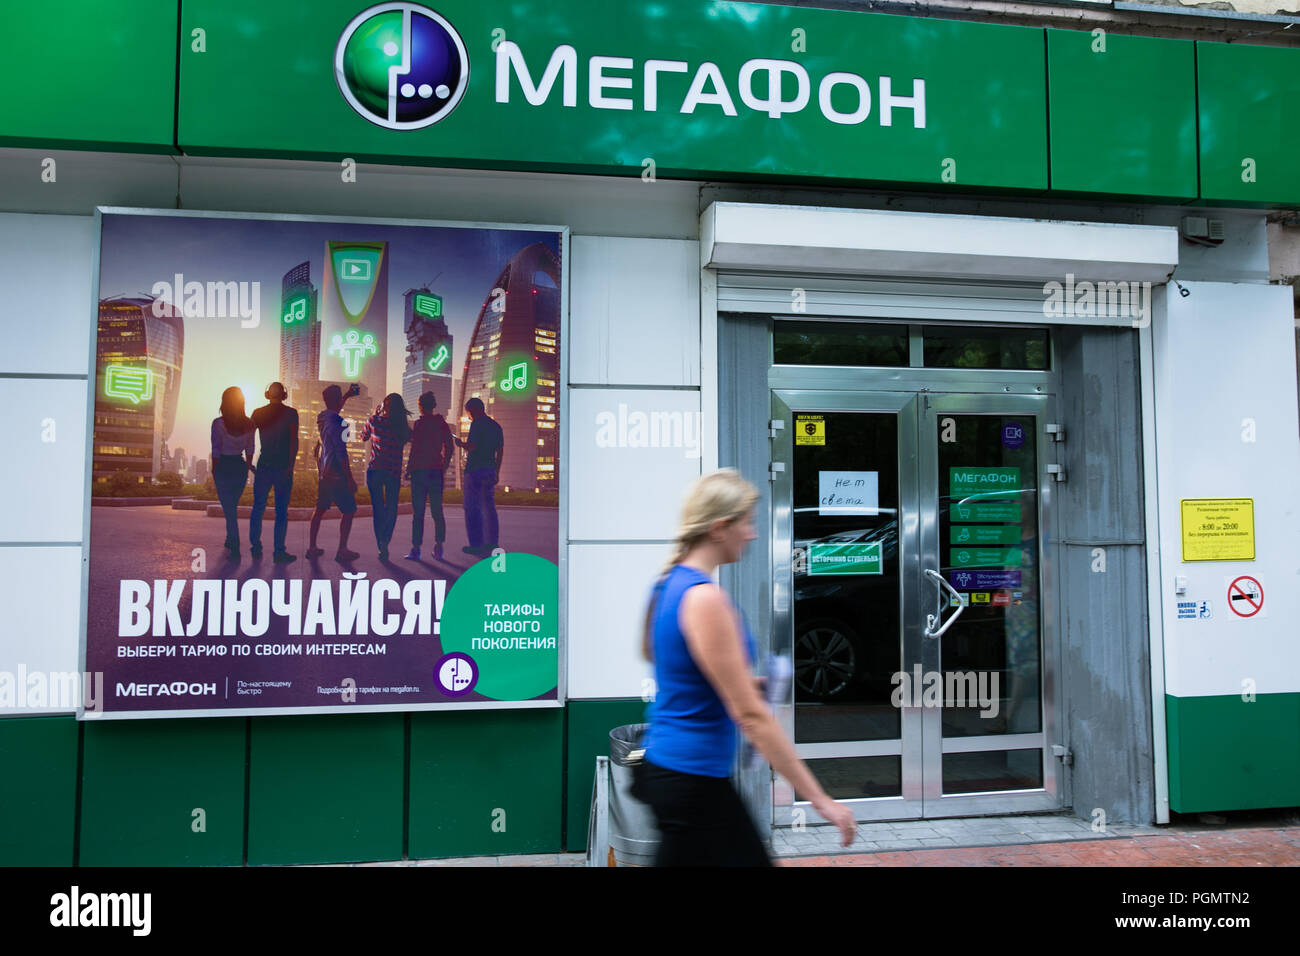 Megafon, mobile phone operator, Russia Stock Photo - Alamy